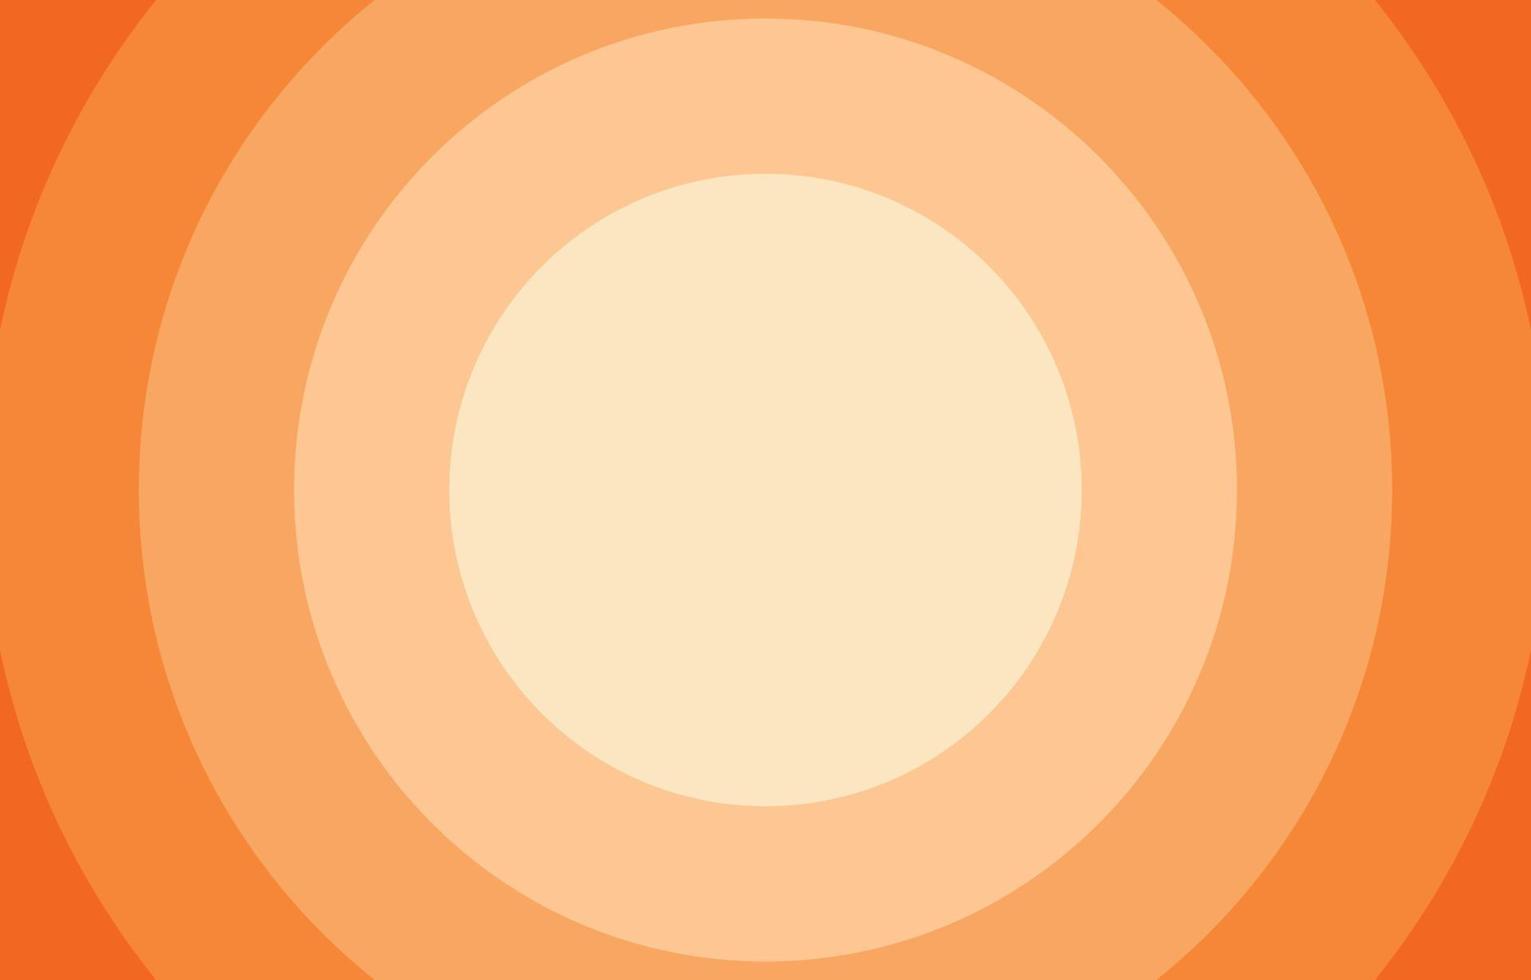 orange circle background light to dark gradation,copy space,fresh concept,seasons,autumn,summer wallpapers vector illustration